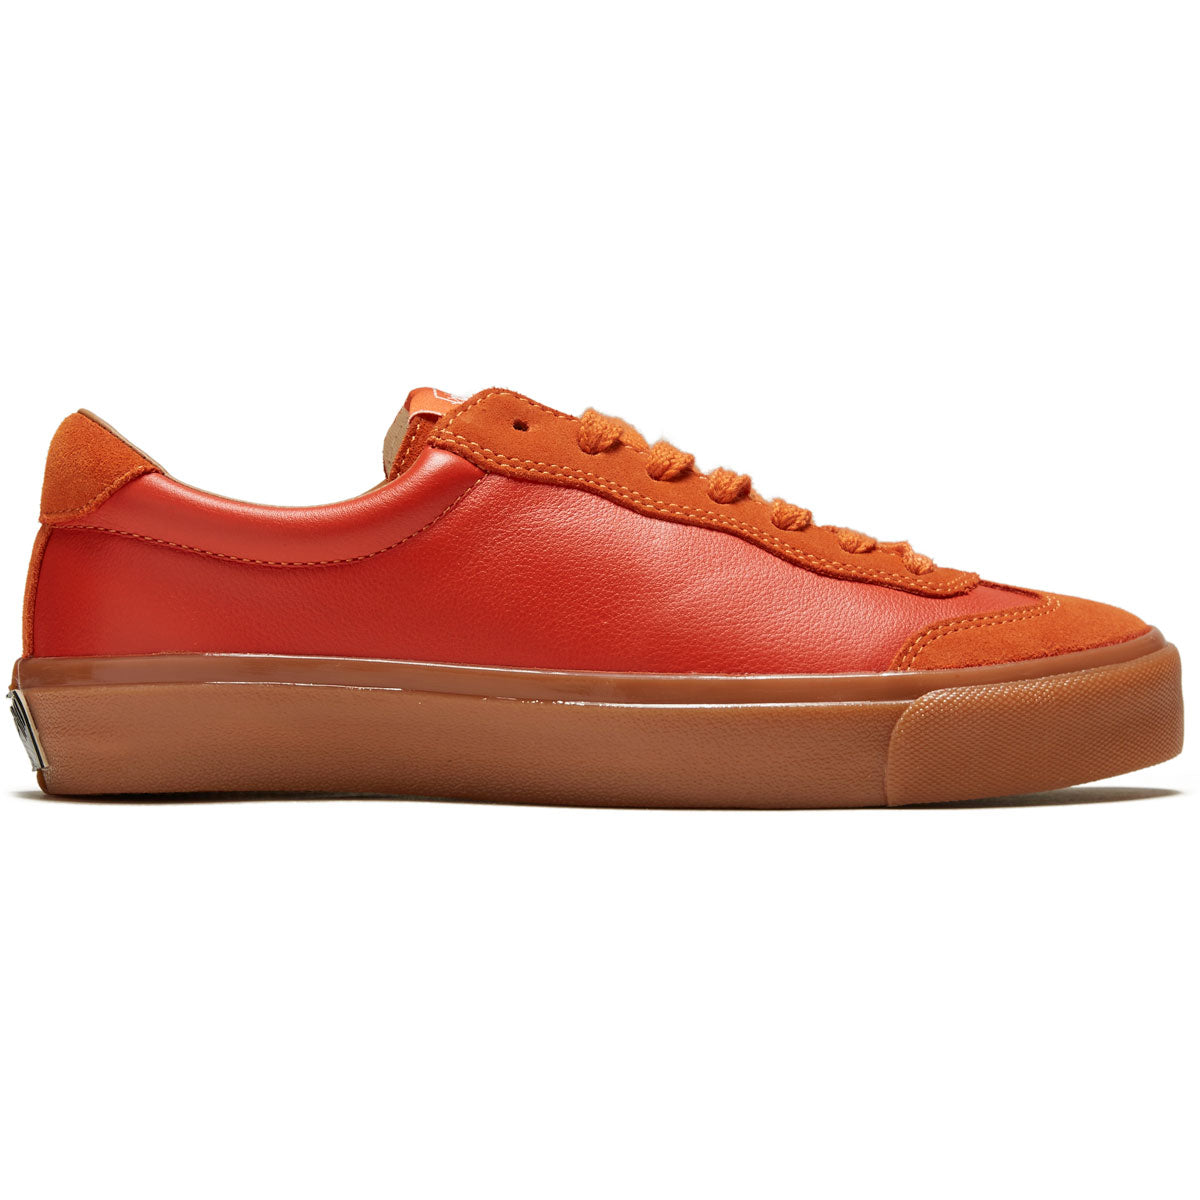 Last Resort AB VM004 Milic Leather Suede Low Shoes - Duo Orange/Gum image 1